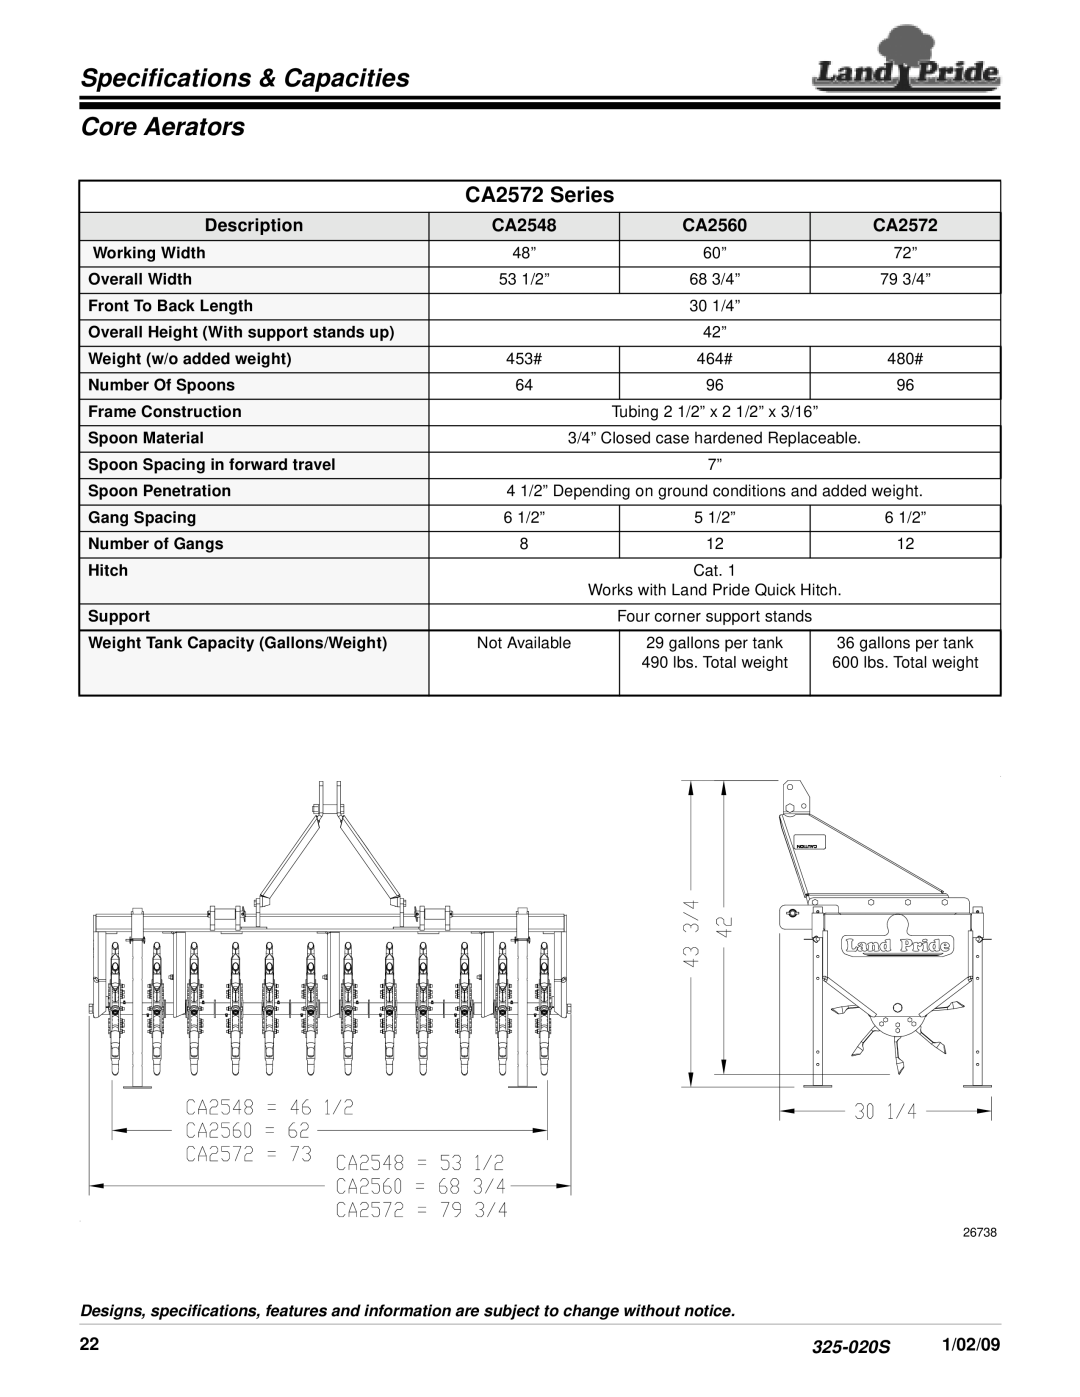 Land Pride CA2572 Series specifications Specifications & Capacities Core Aerators, Description, CA2548, CA2560, 325-020S 